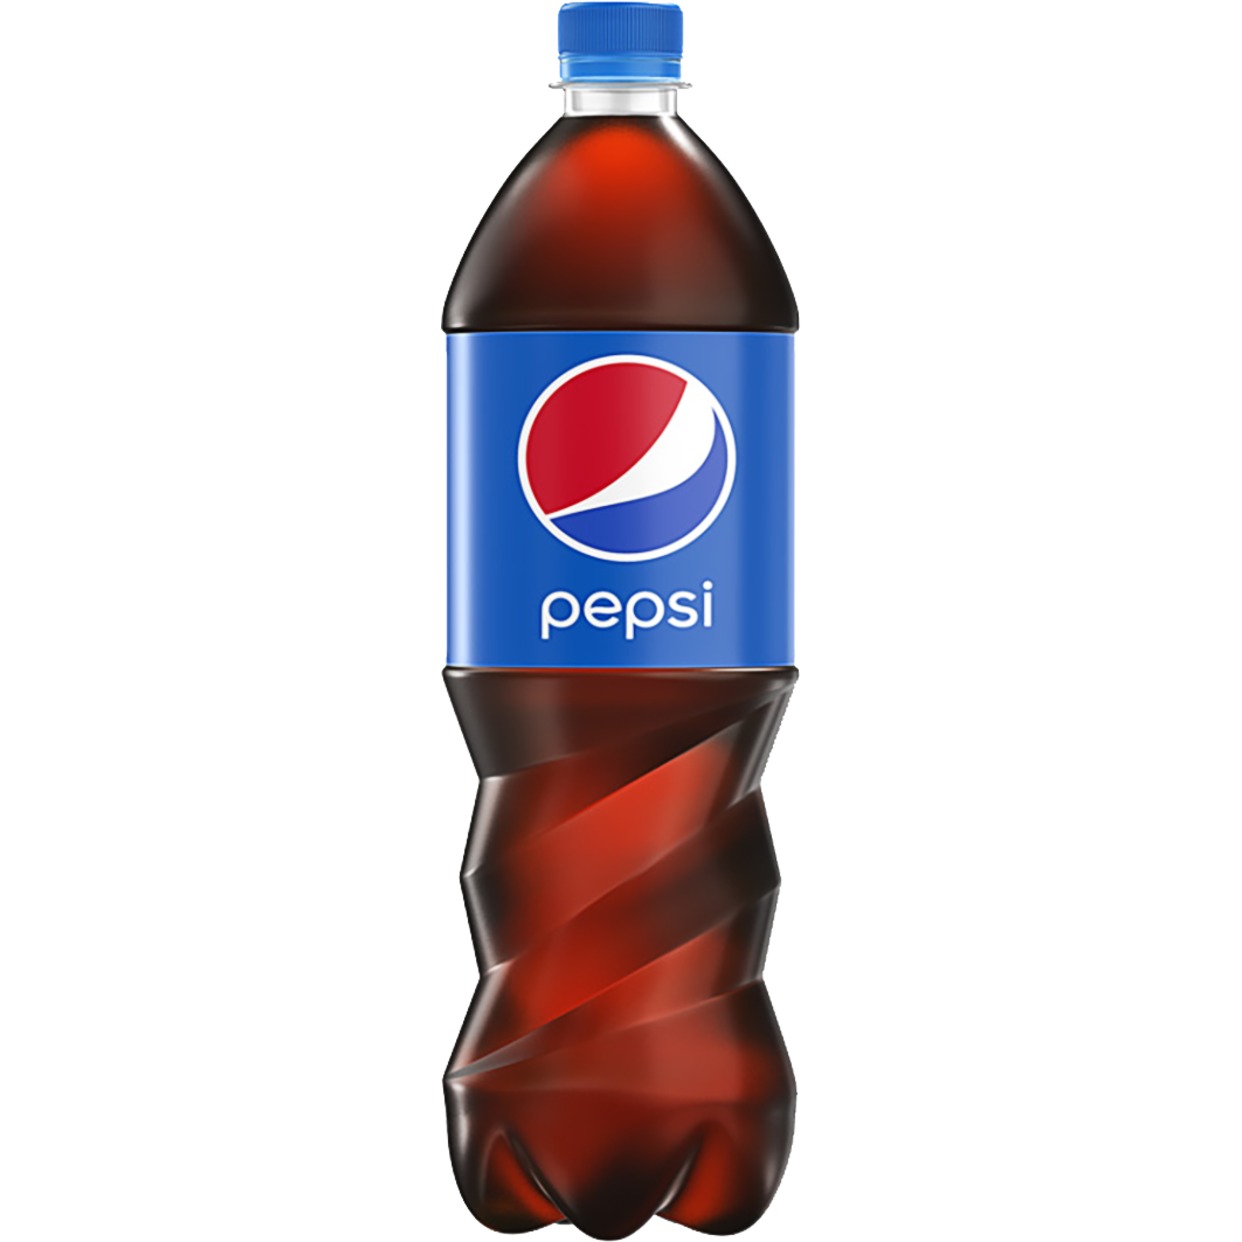 Напиток Pepsi, 1 л по акции в Пятерочке